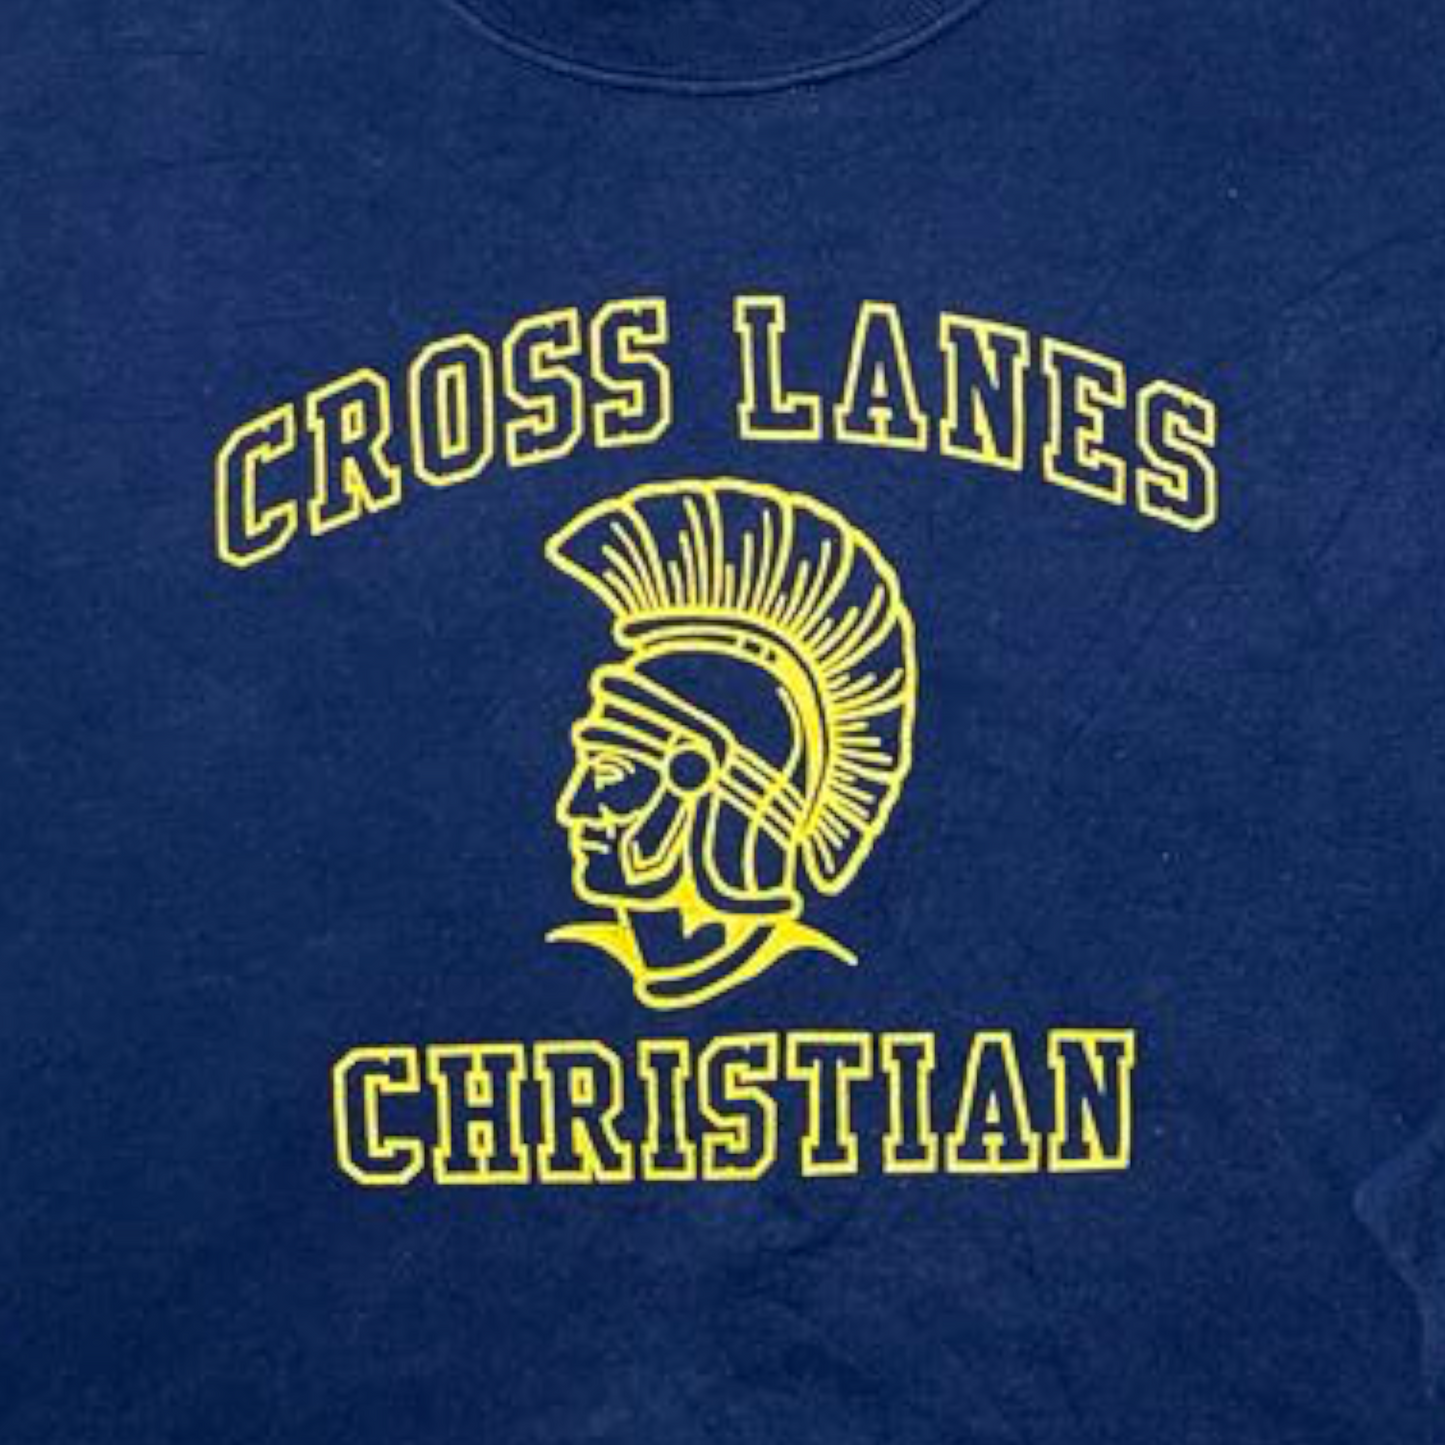 Vintage Cross Lanes sweatshirt - XL